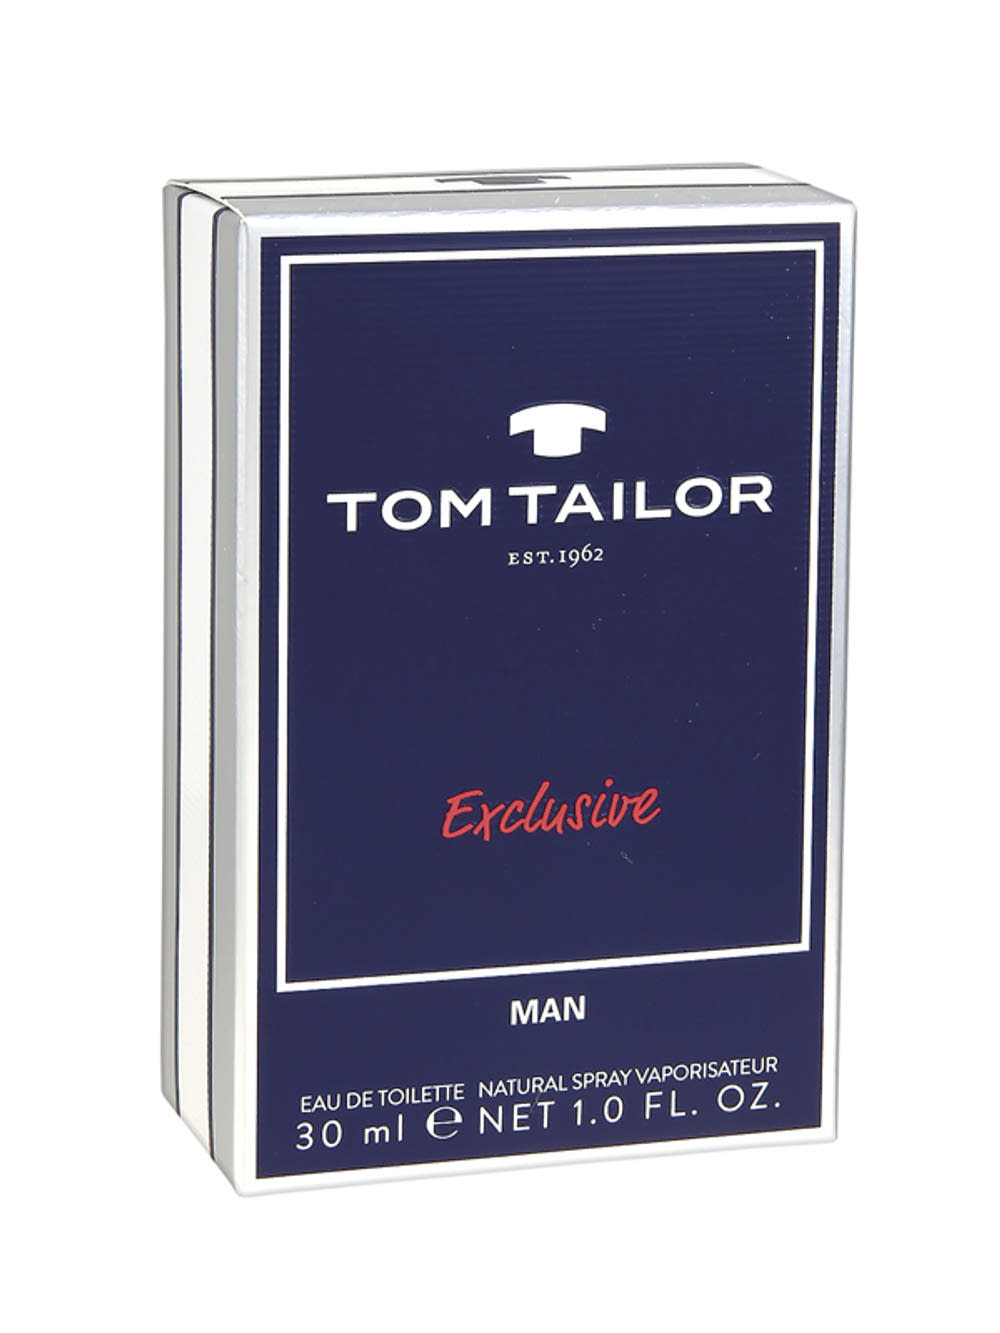 Tom Tailor Exclusive de férfi - ml Toilette Eau 30